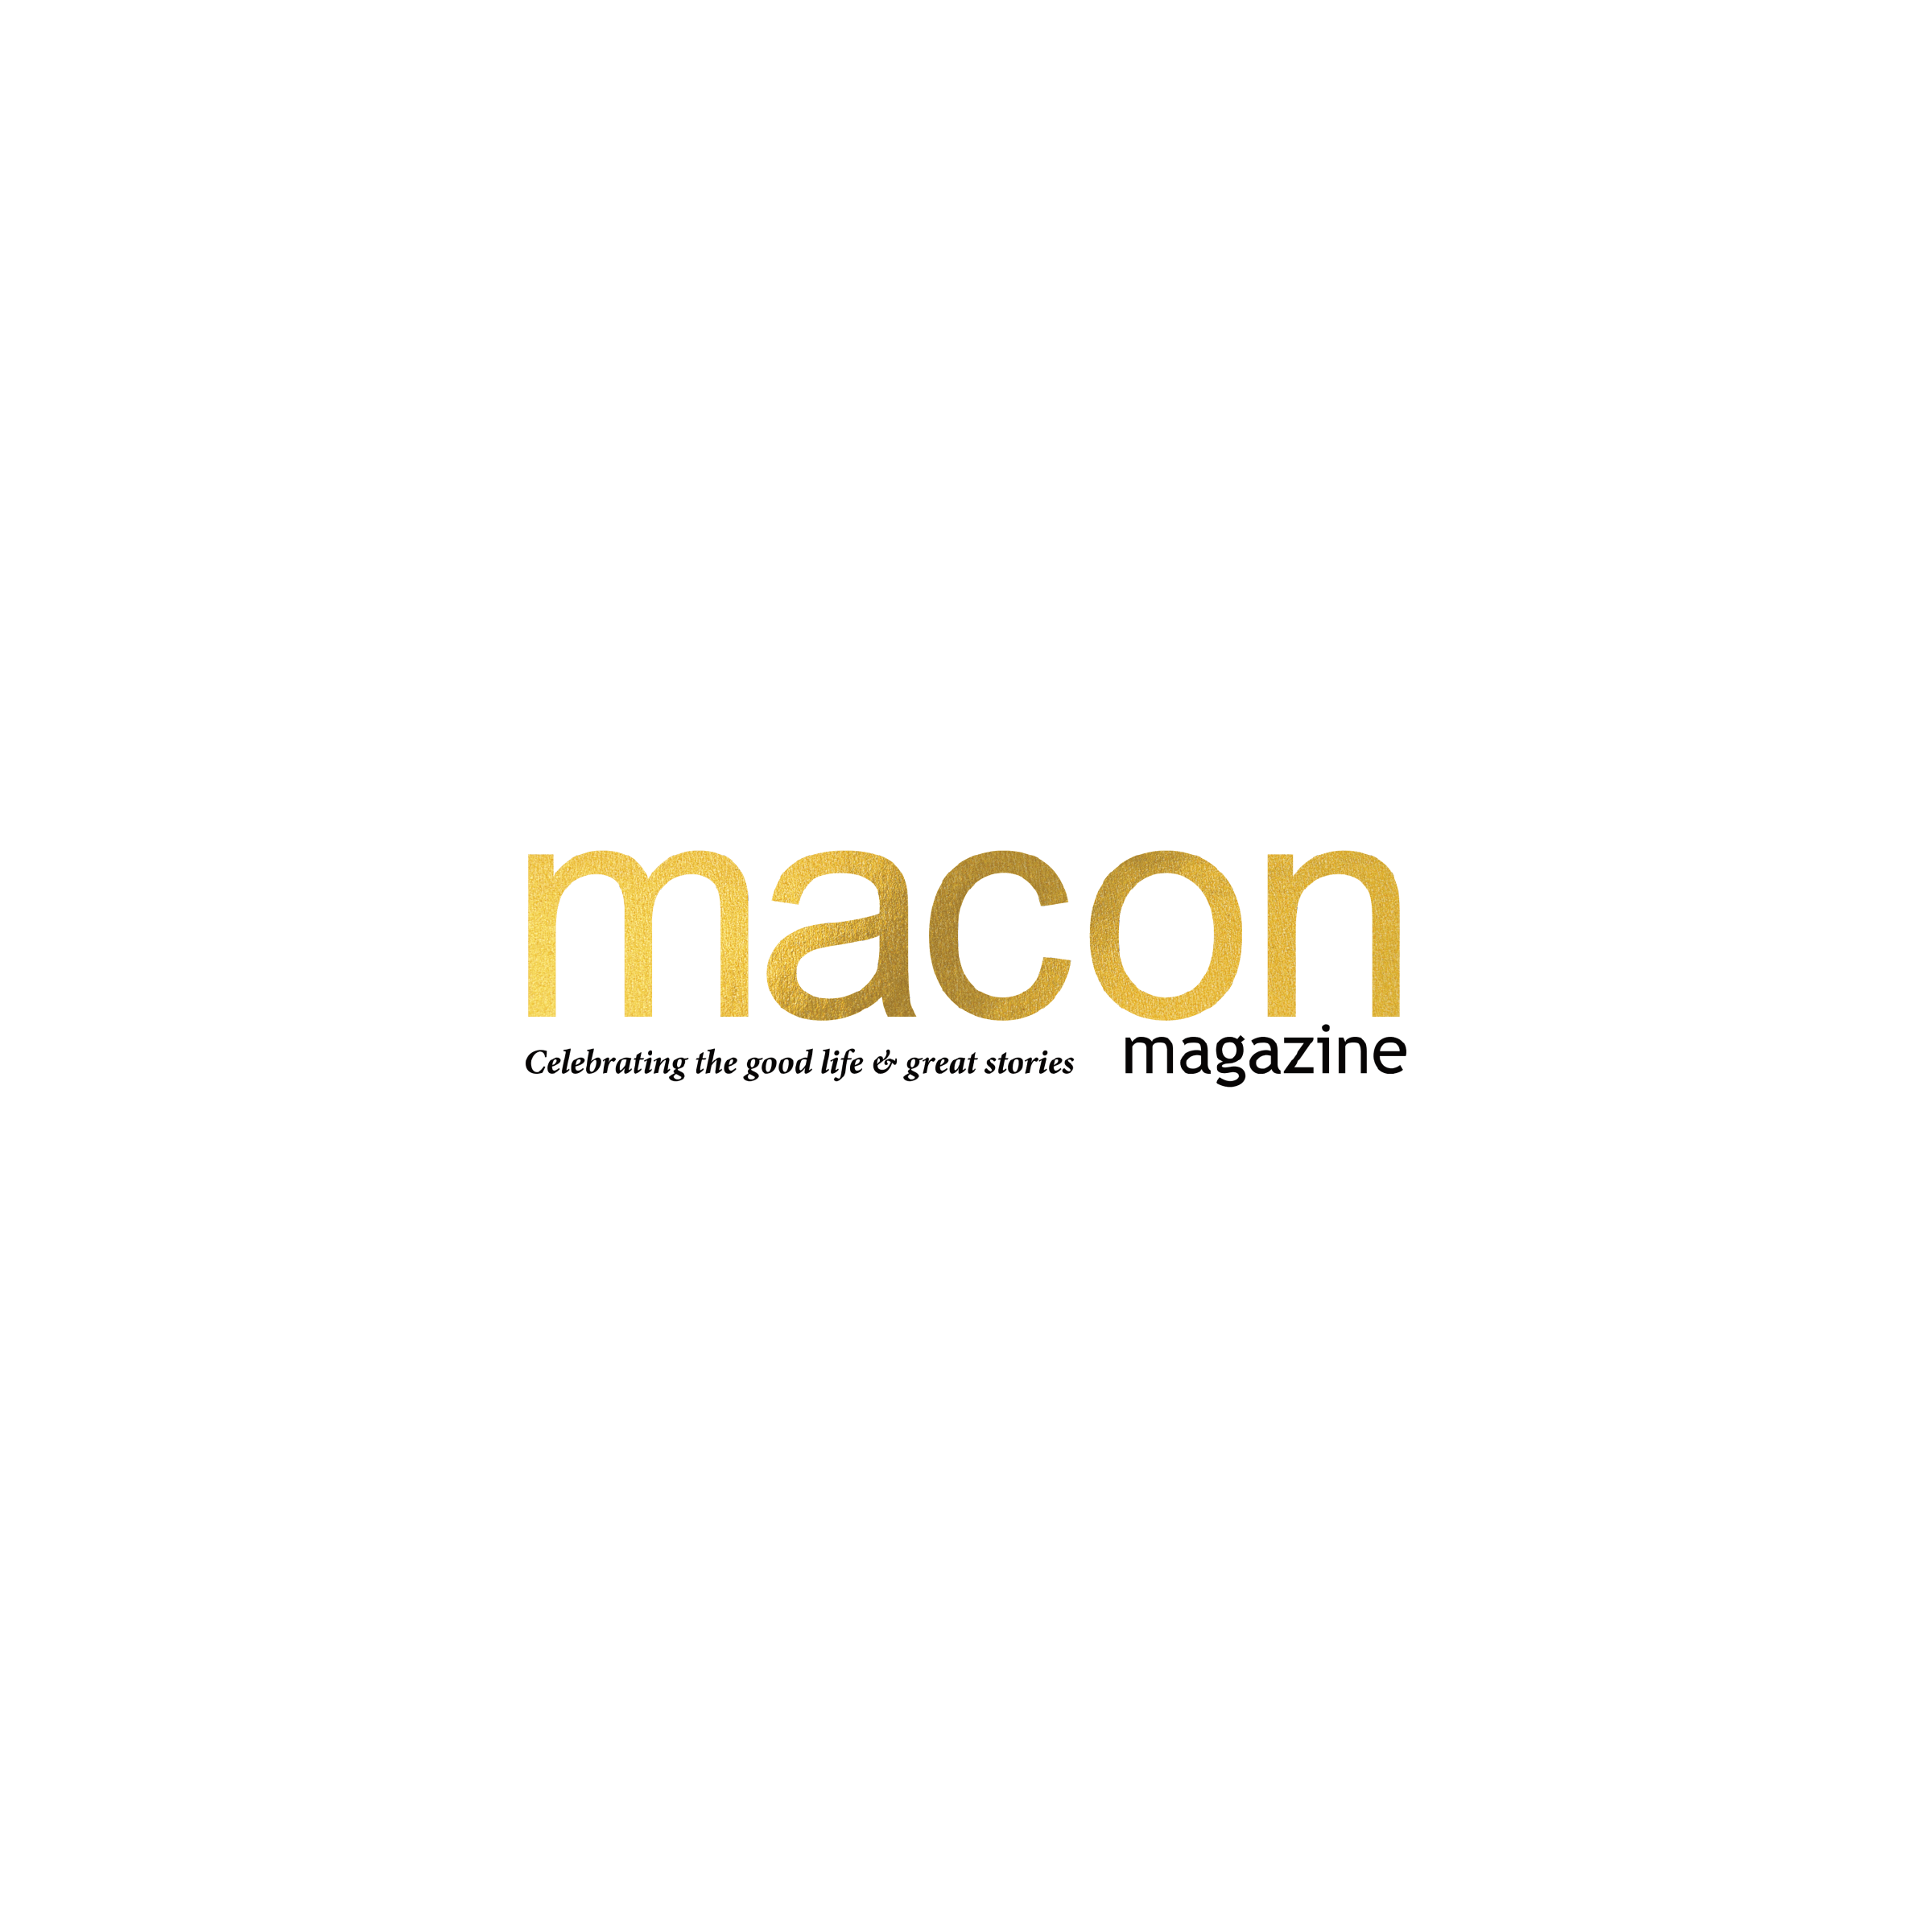 macon magazine